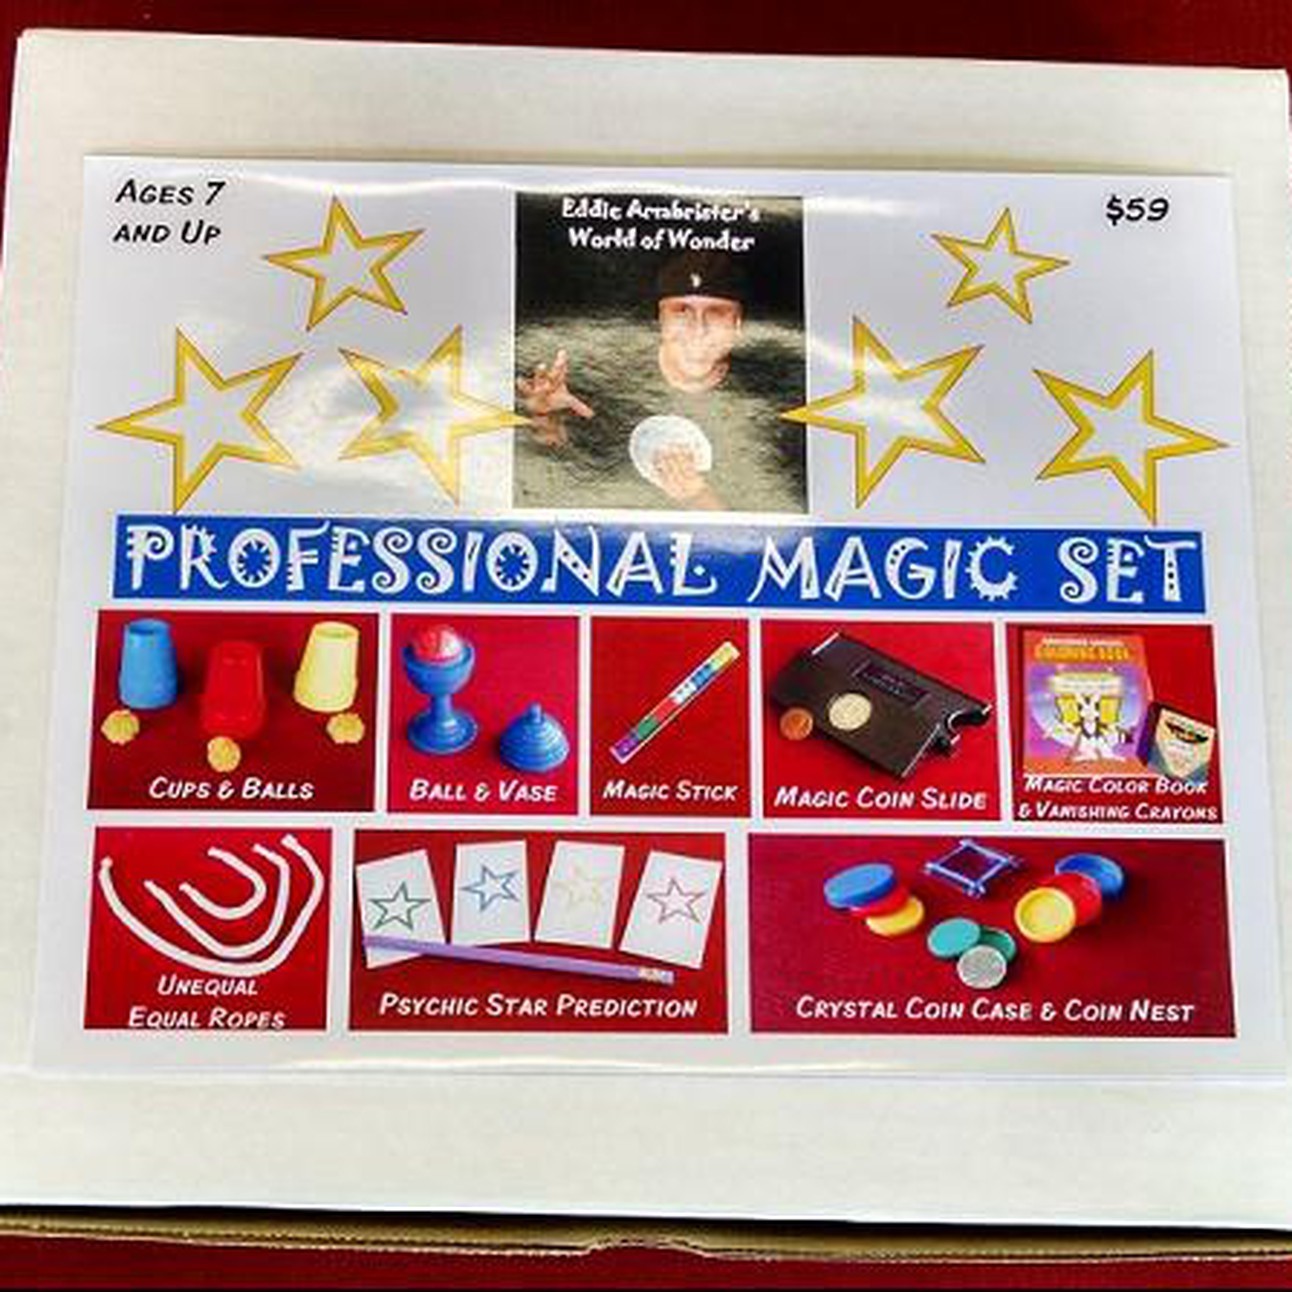 Eddie Armbrister's PROFESSIONAL Magic Set